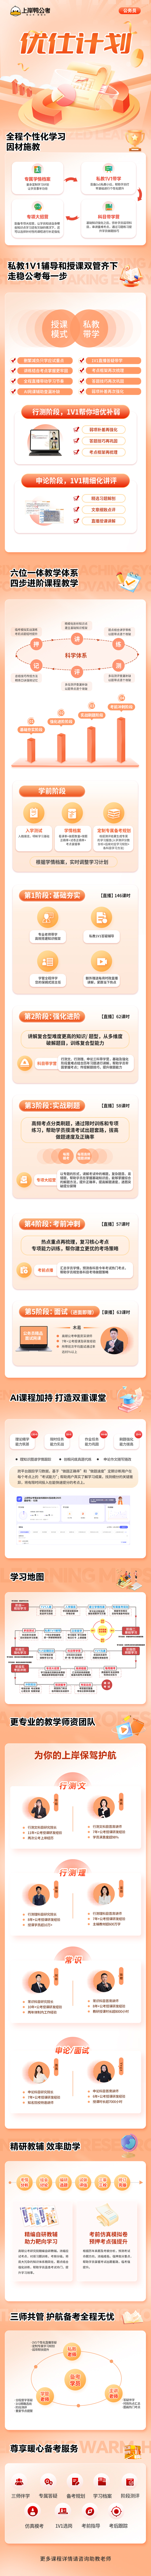 http://simg01.gaodunwangxiao.com/uploadfiles/product-center/202406/28/ff246_20240628090929.jpg